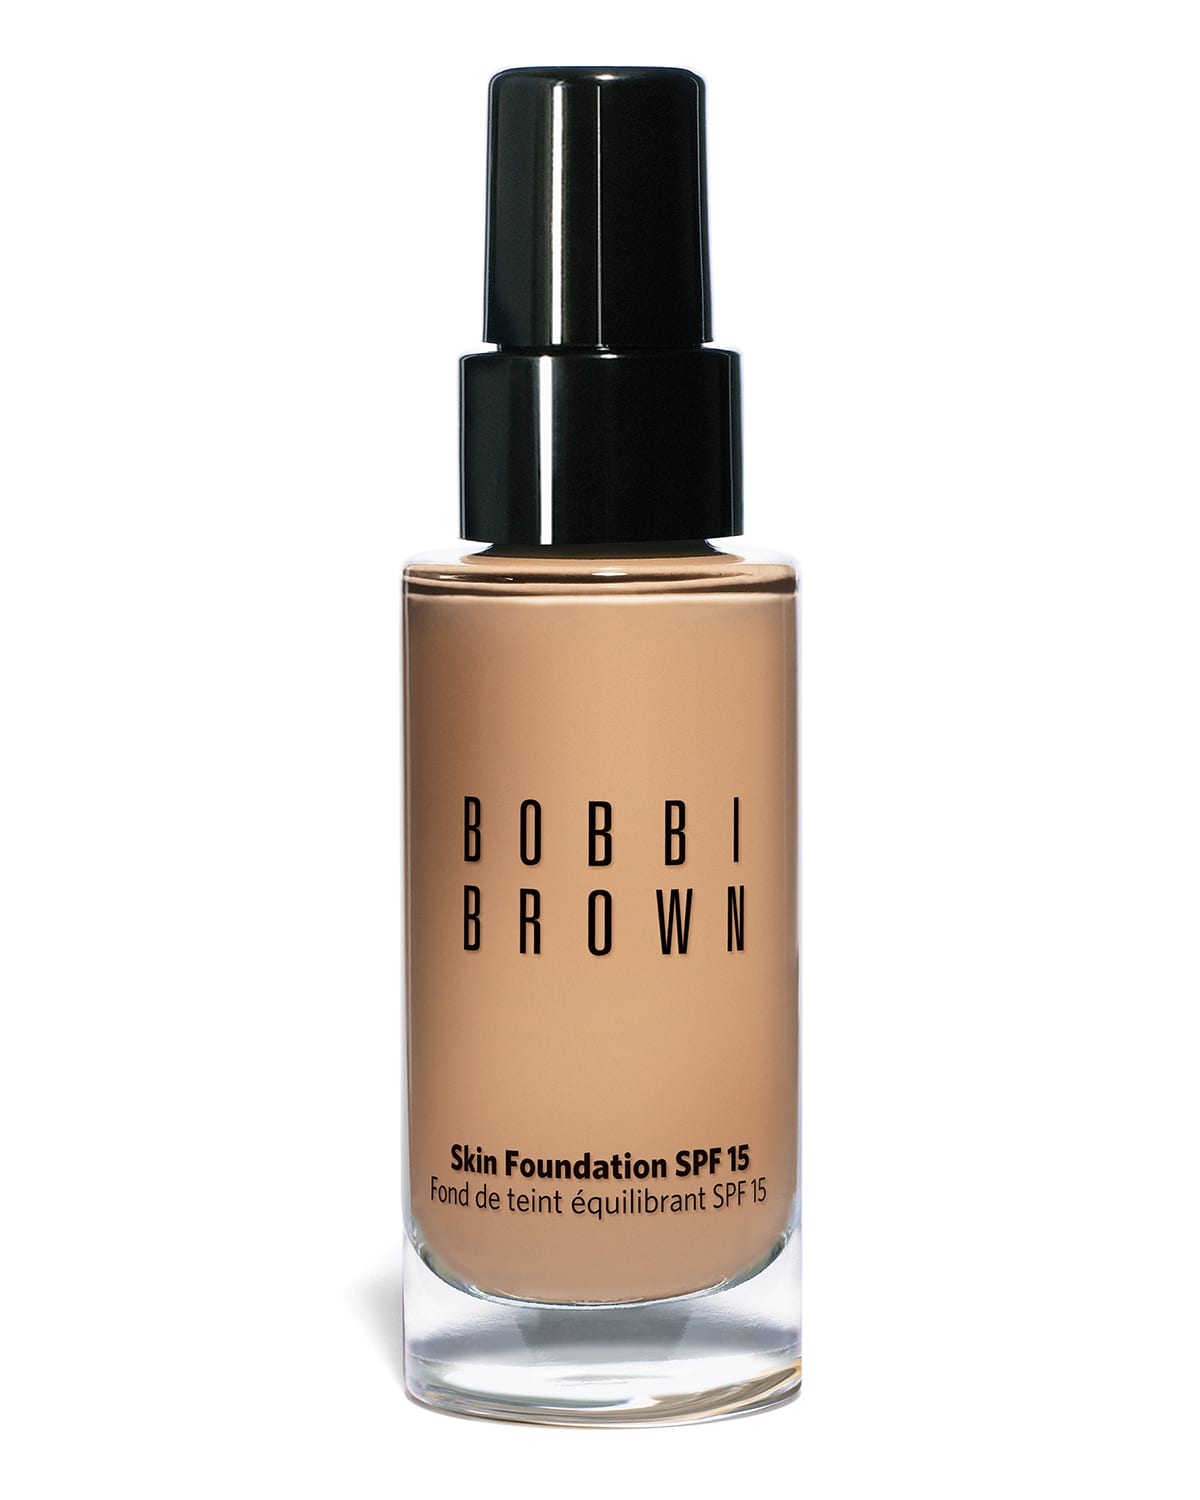 Bobbi Brown Skin Foundation Spf 15